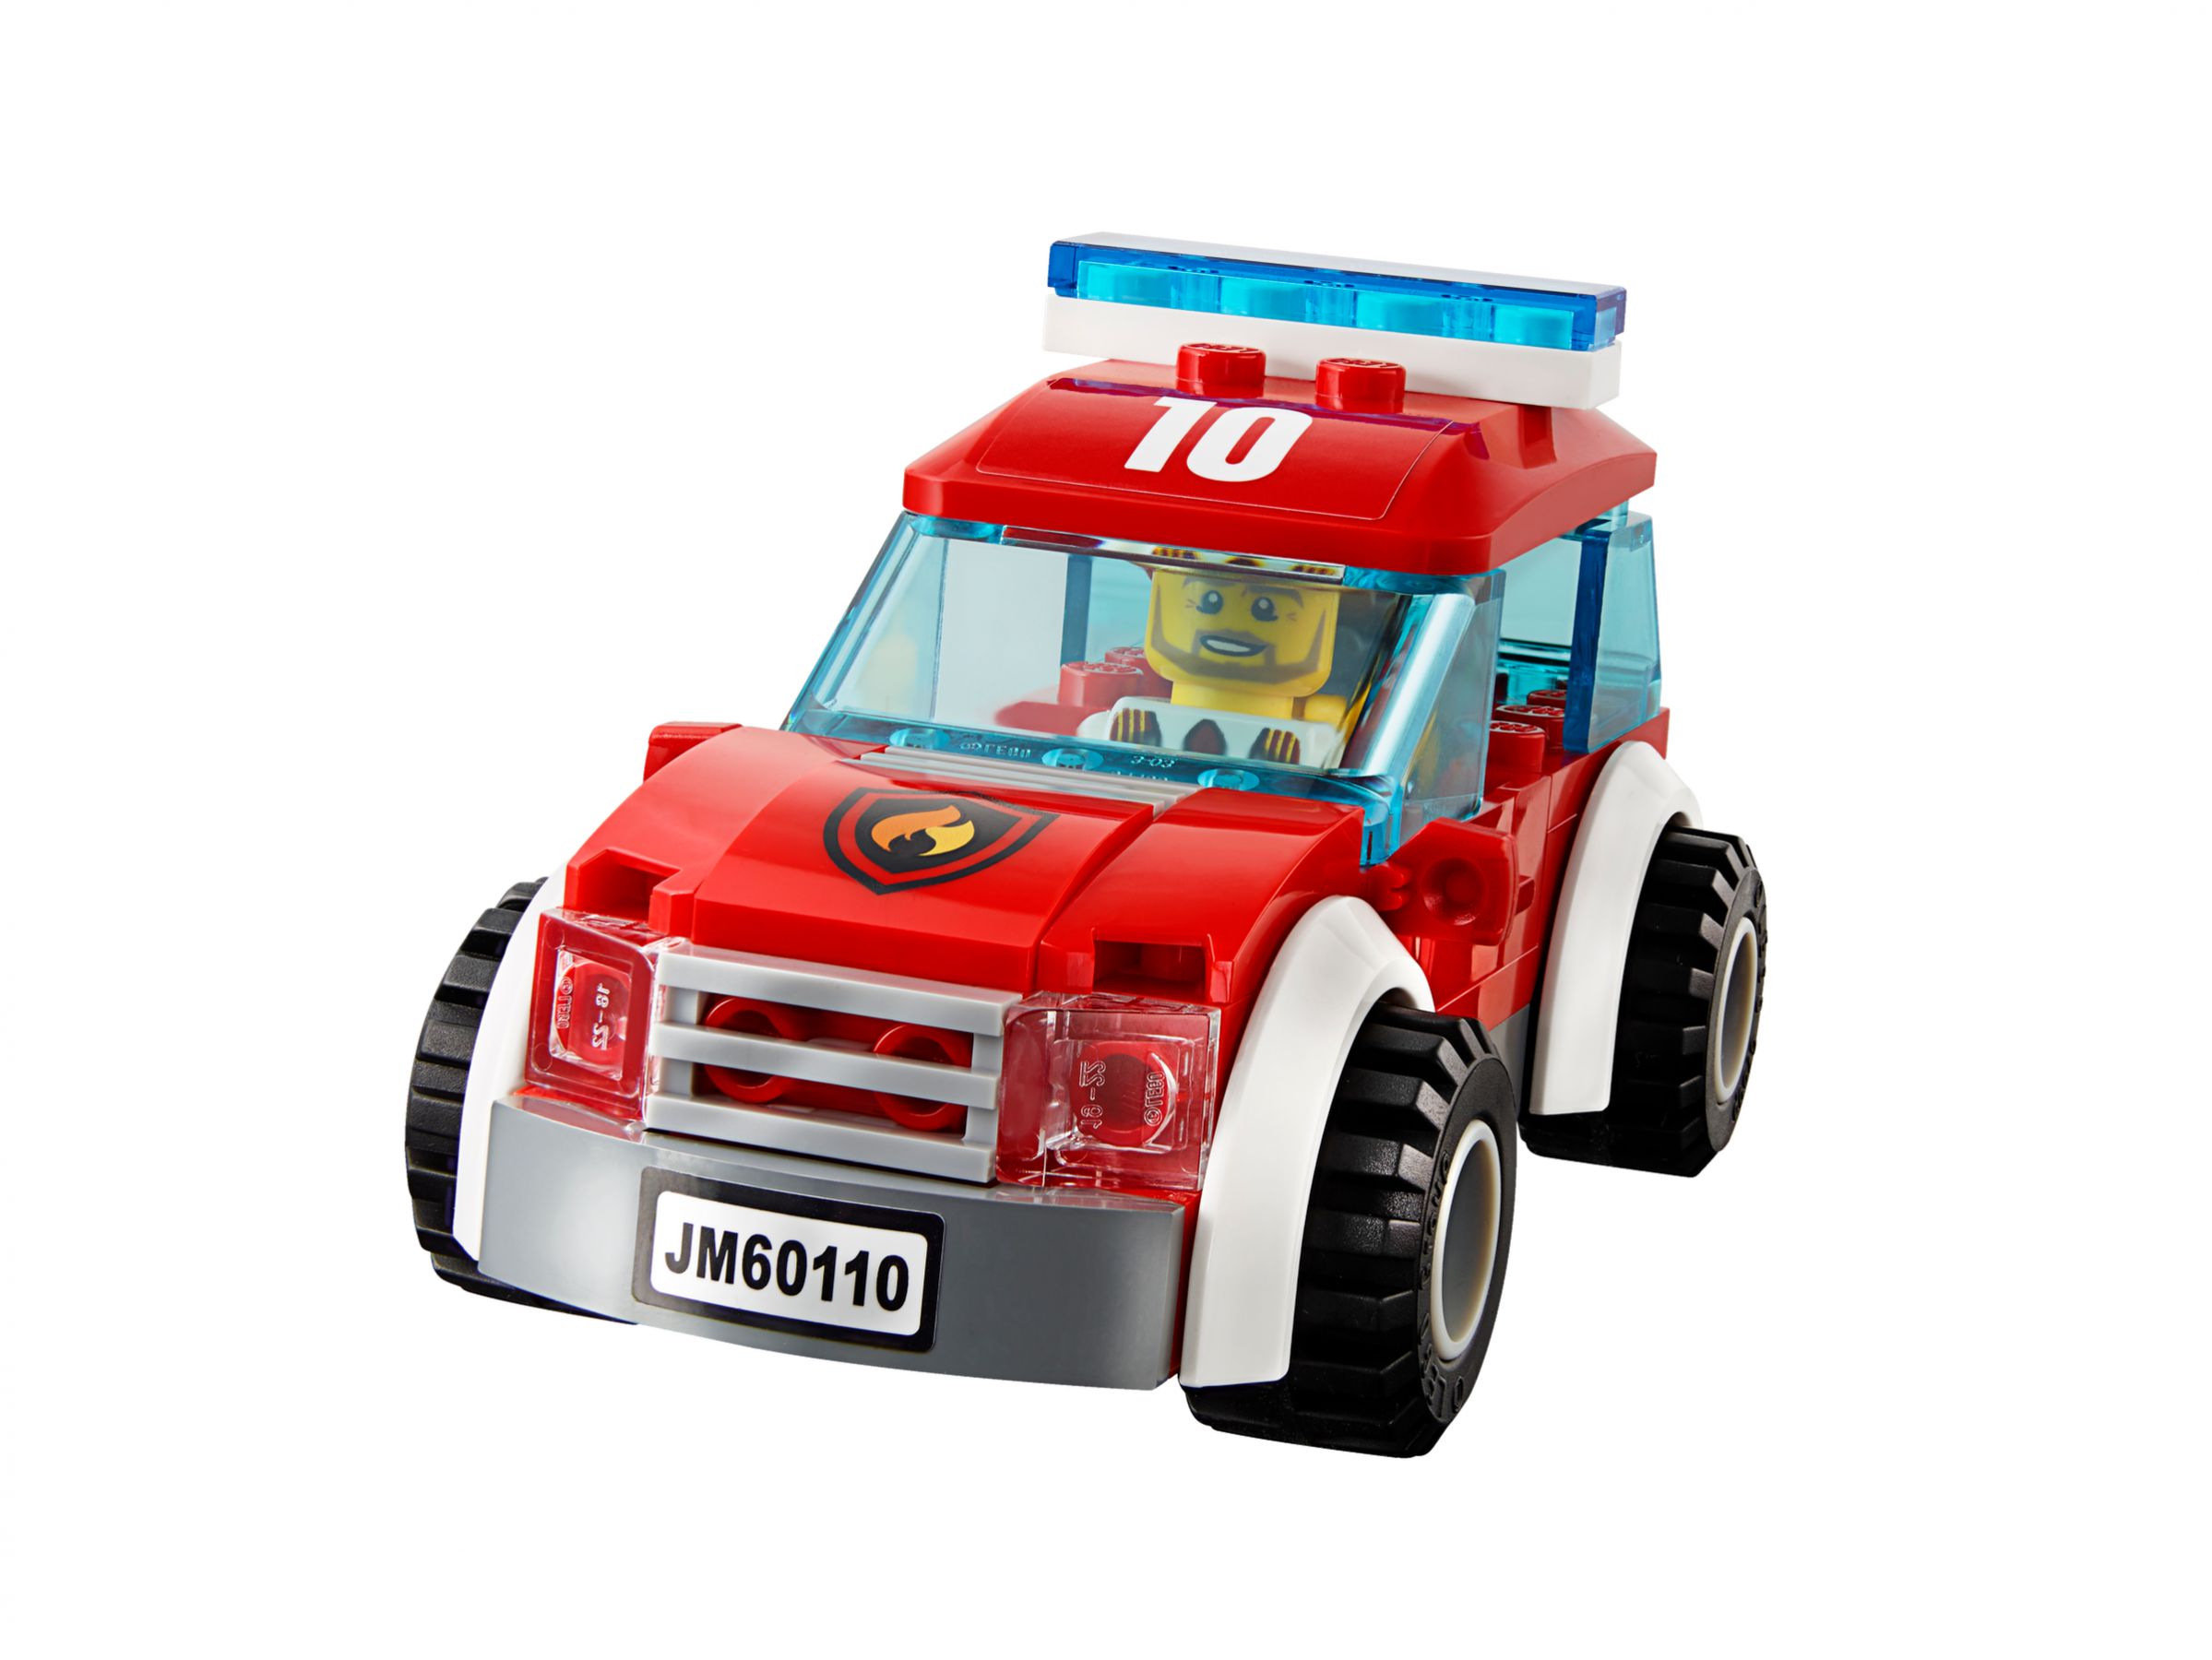 LEGO City 60110 Große Feuerwehrstation LEGO_60110_alt11.jpg